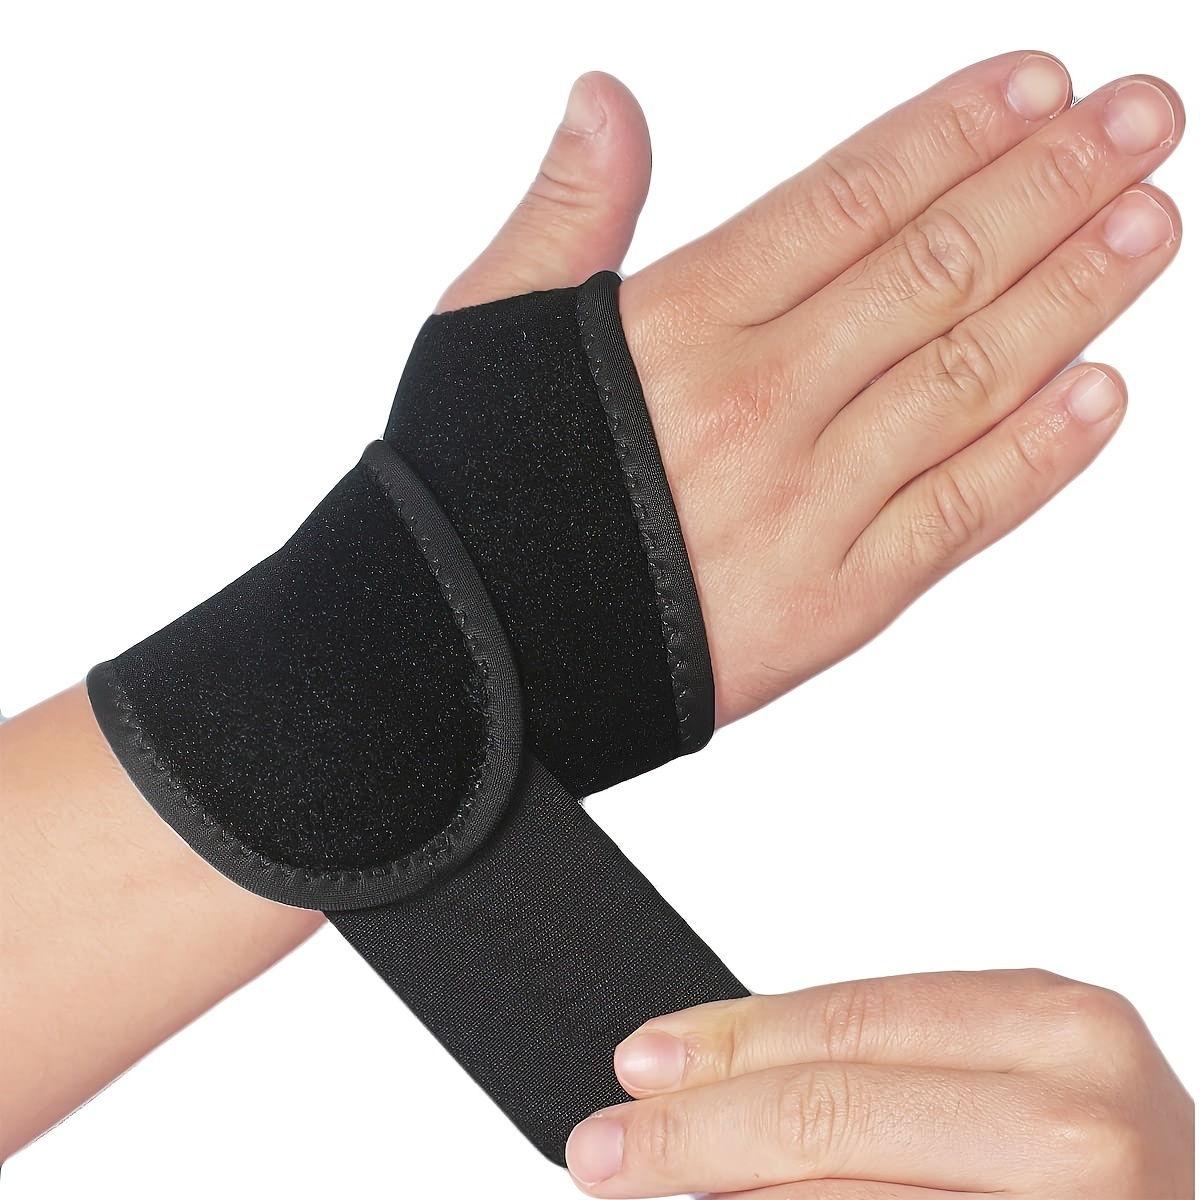 Comfy Brace Premium Lined Wrist Support Adjustable Wrist Strap